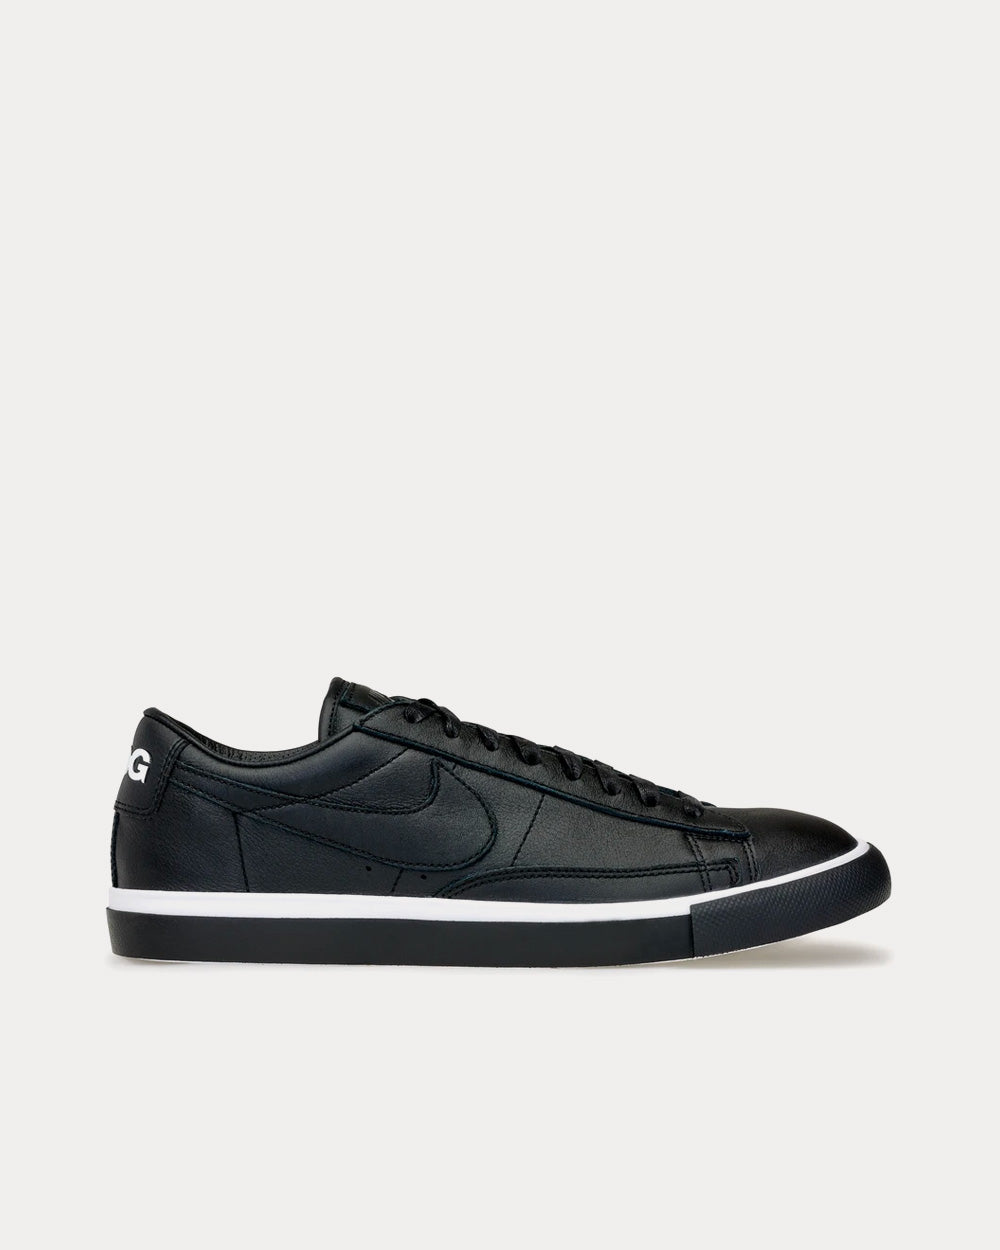 Nike x Comme des Garçons - Blazer Black Low Top Sneakers